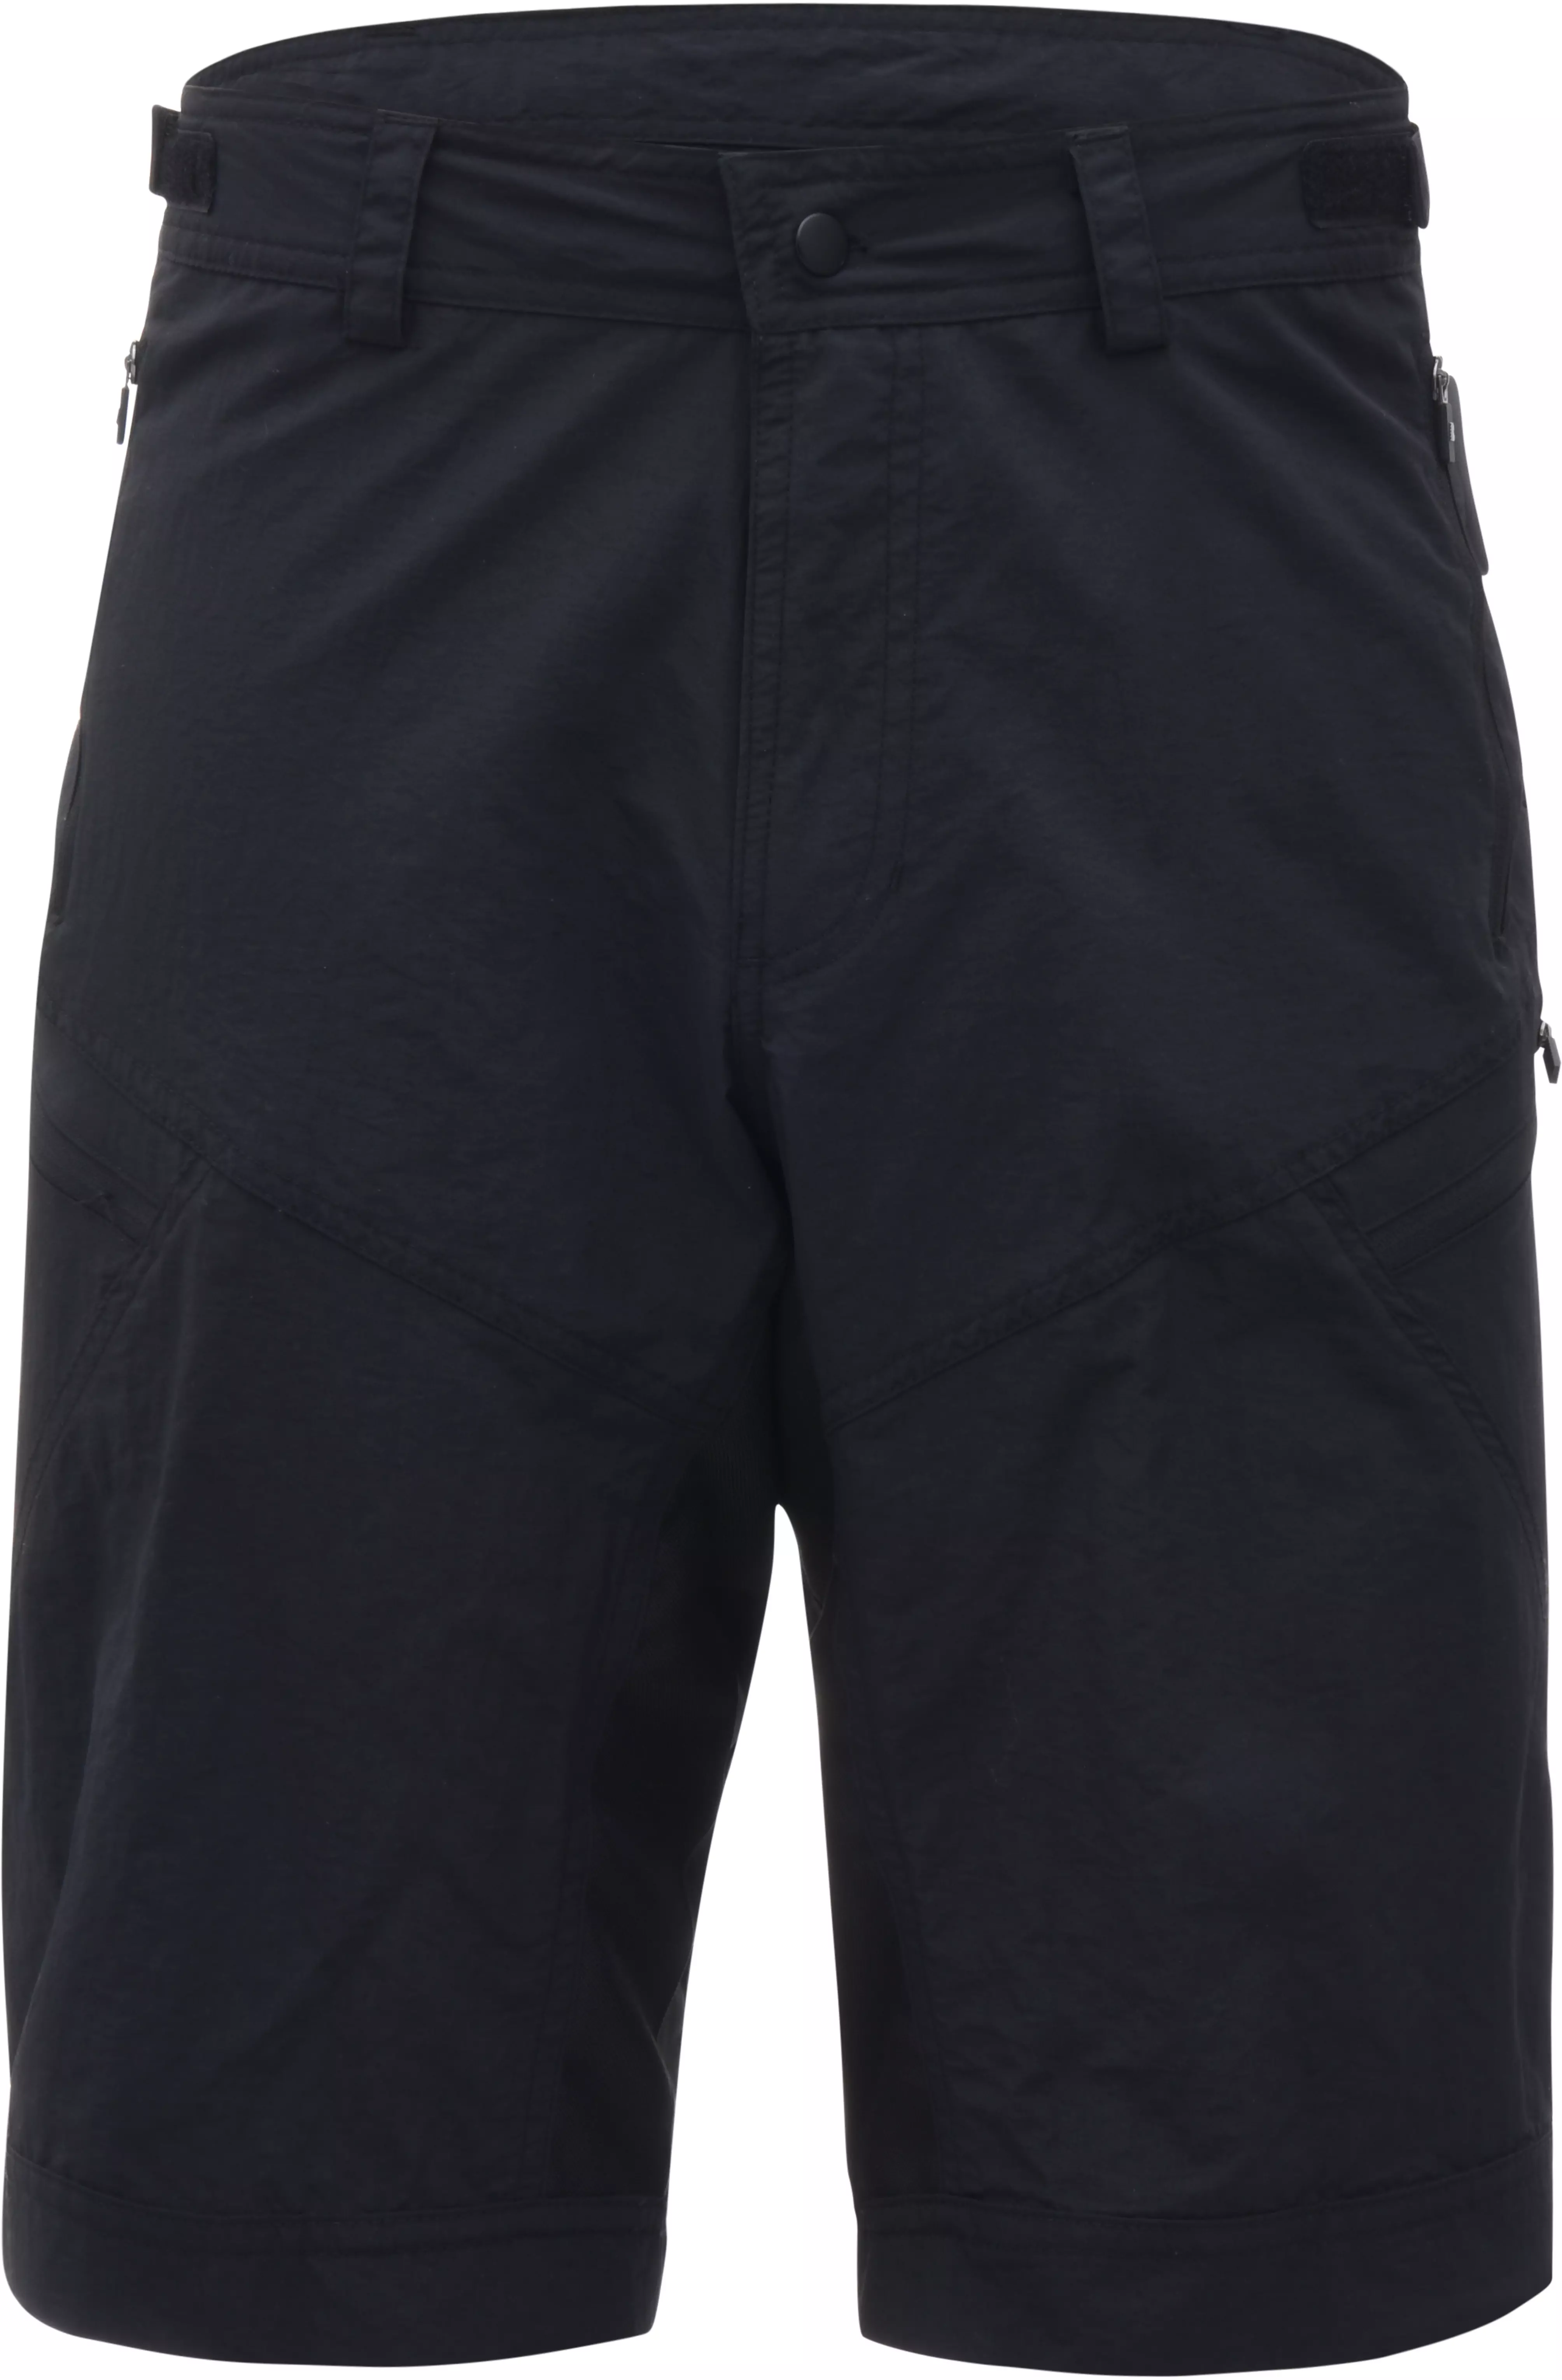 boardman bib shorts